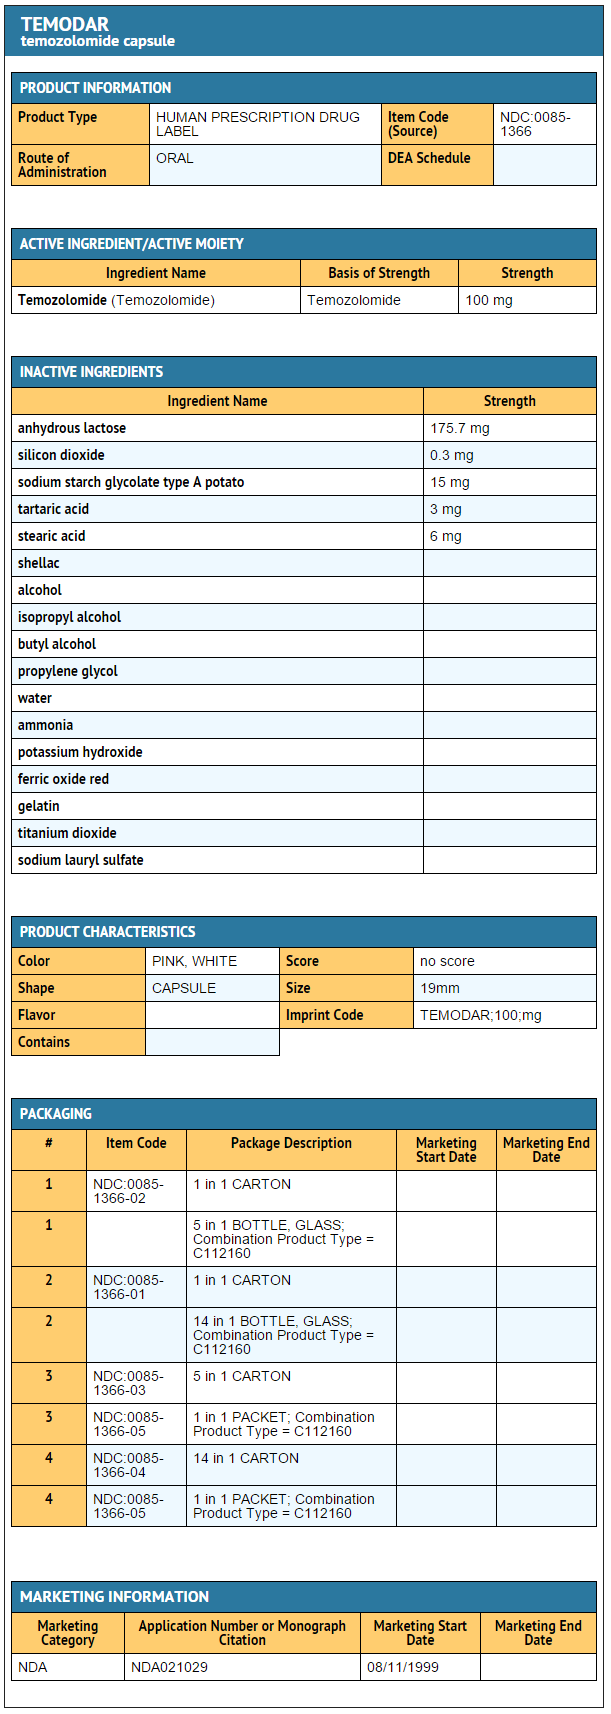 File:Temozolomide capsule 100mg FDA package label.png